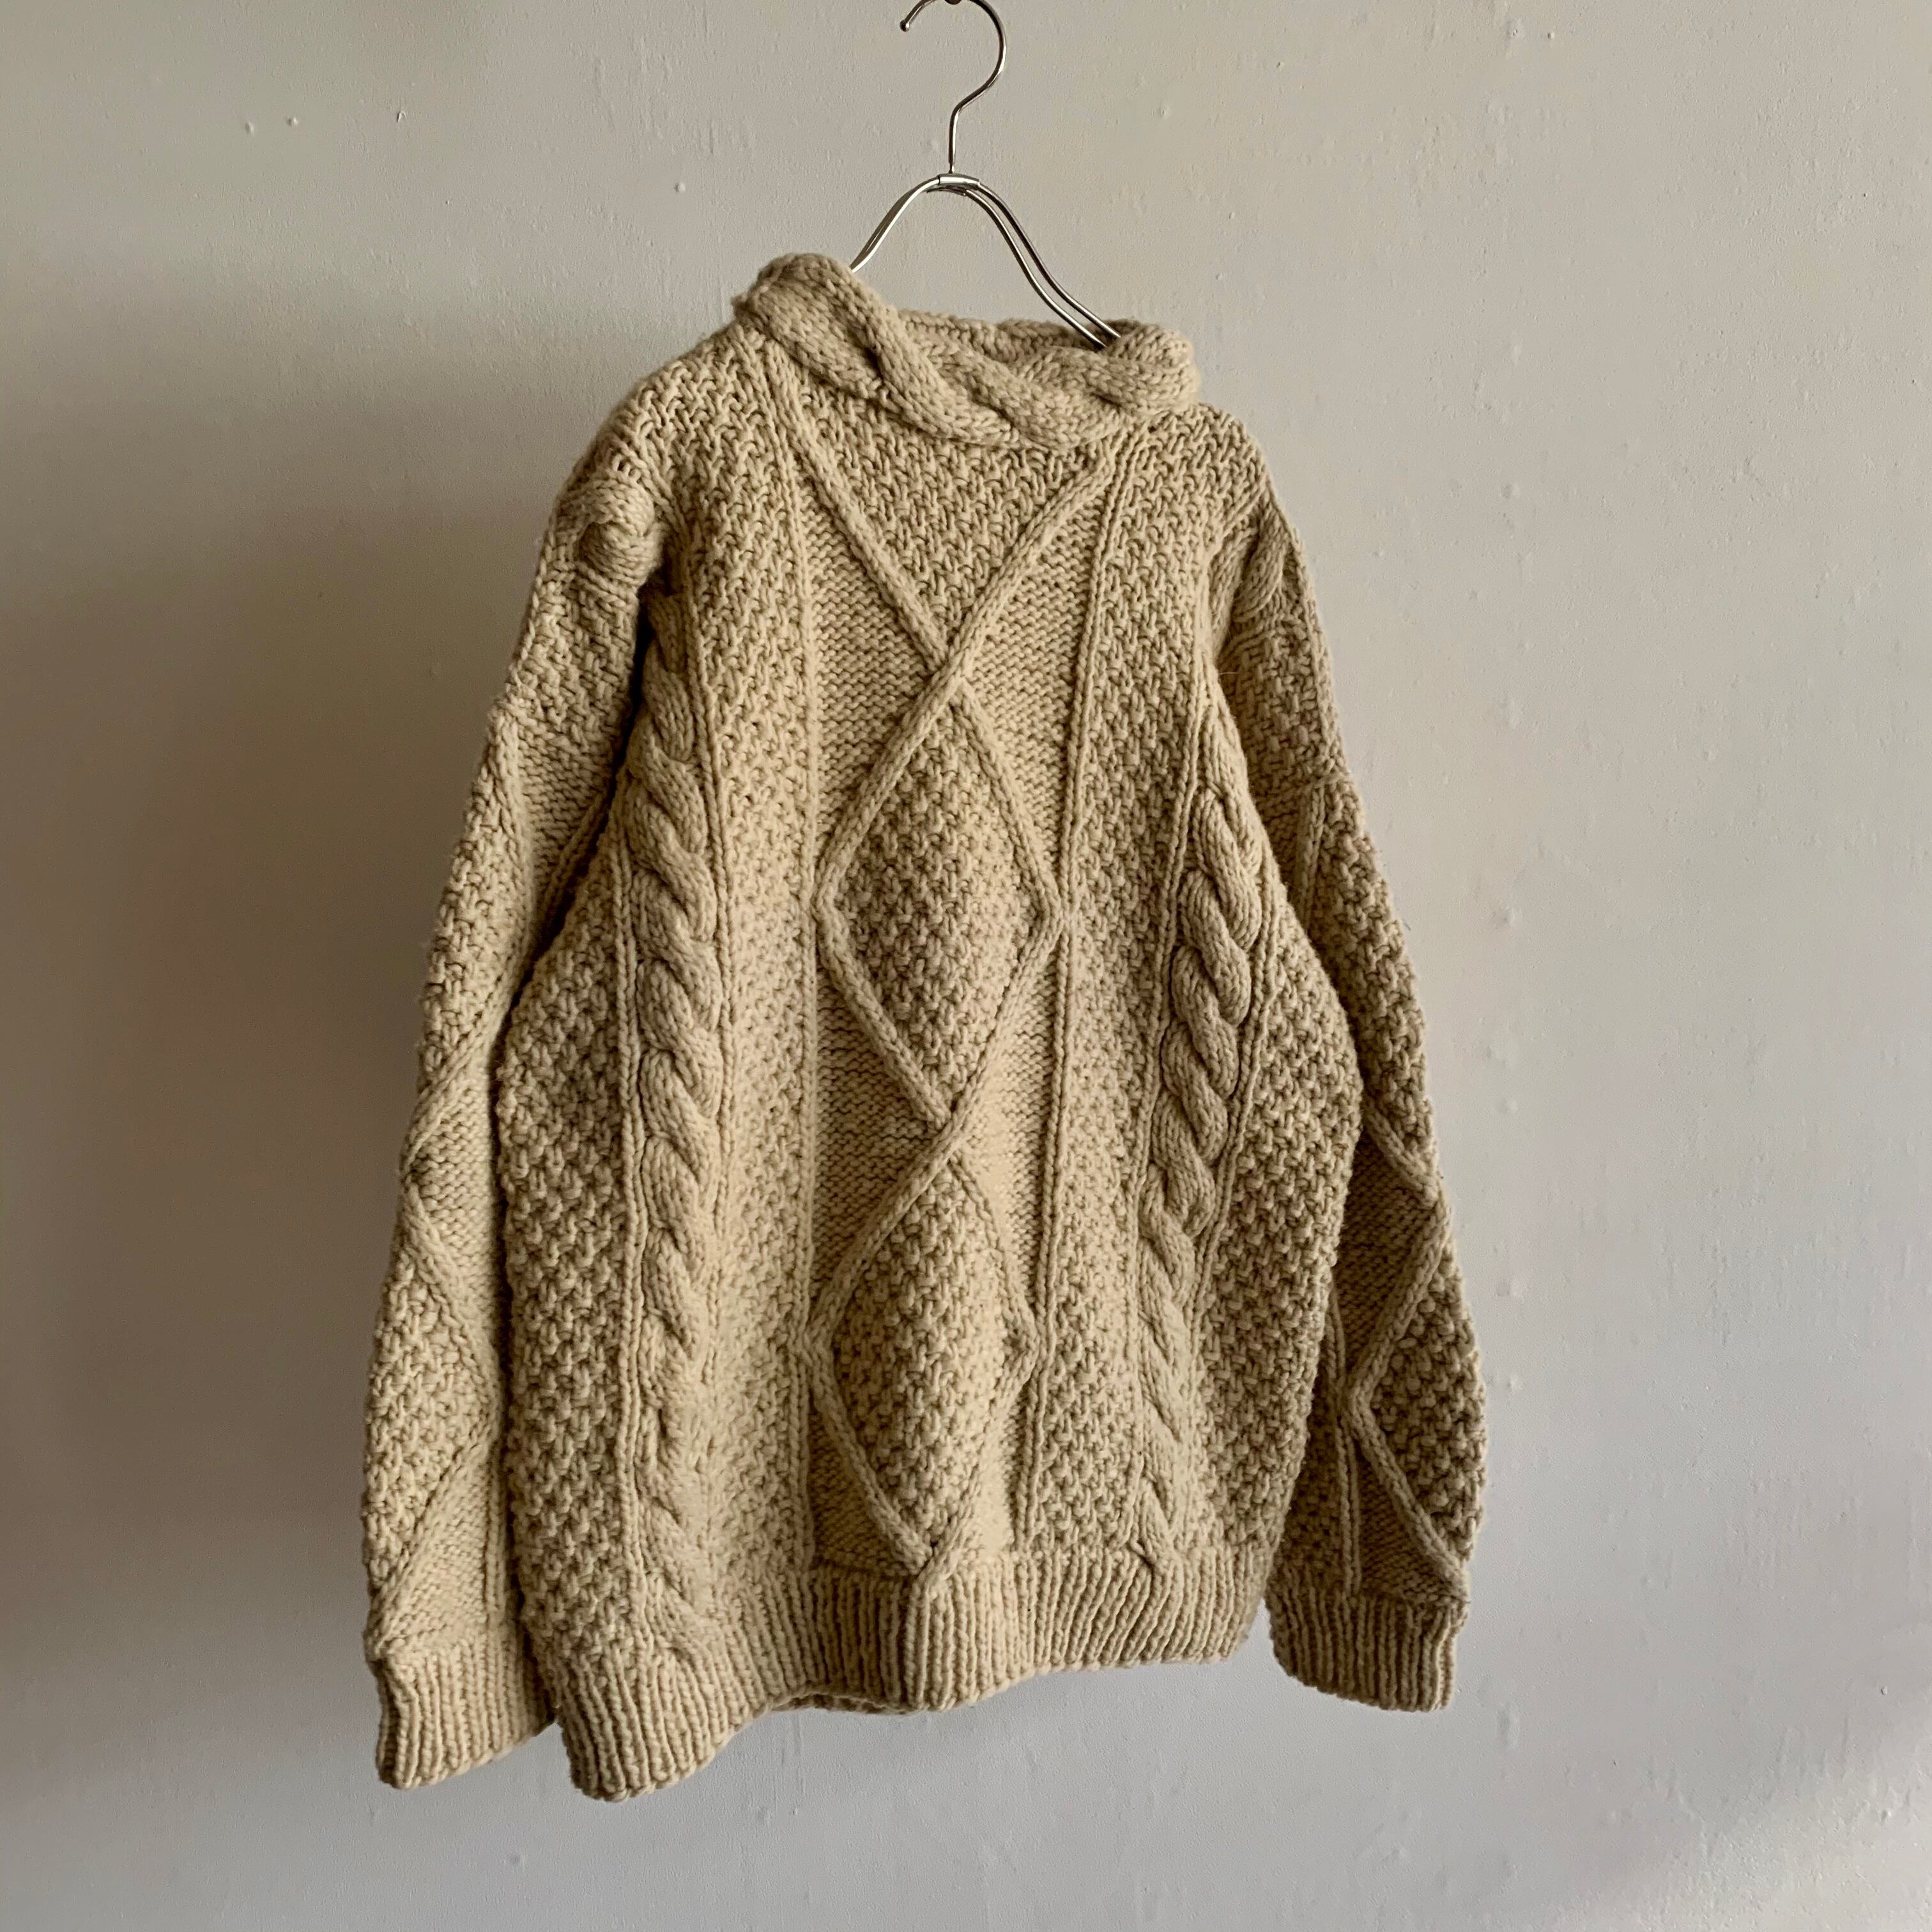 1125. Ecuador hand knit エクアドル ハンド ニット vintage